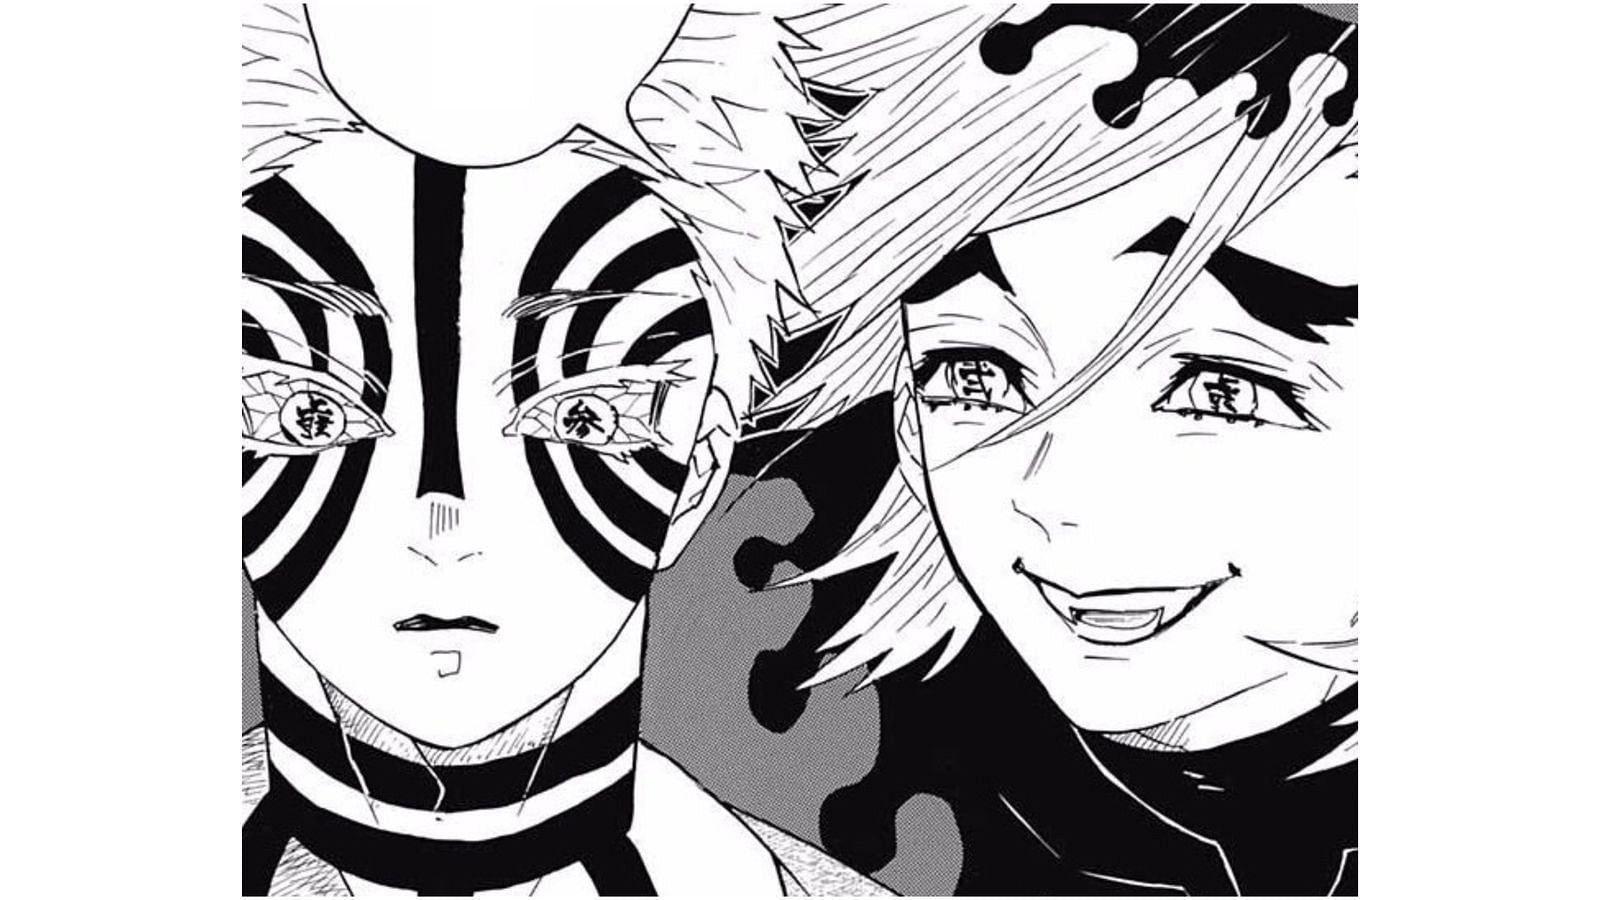 Akaza and Doma as seen in the manga panel of Demon Slayer. (Image via Viz Media)